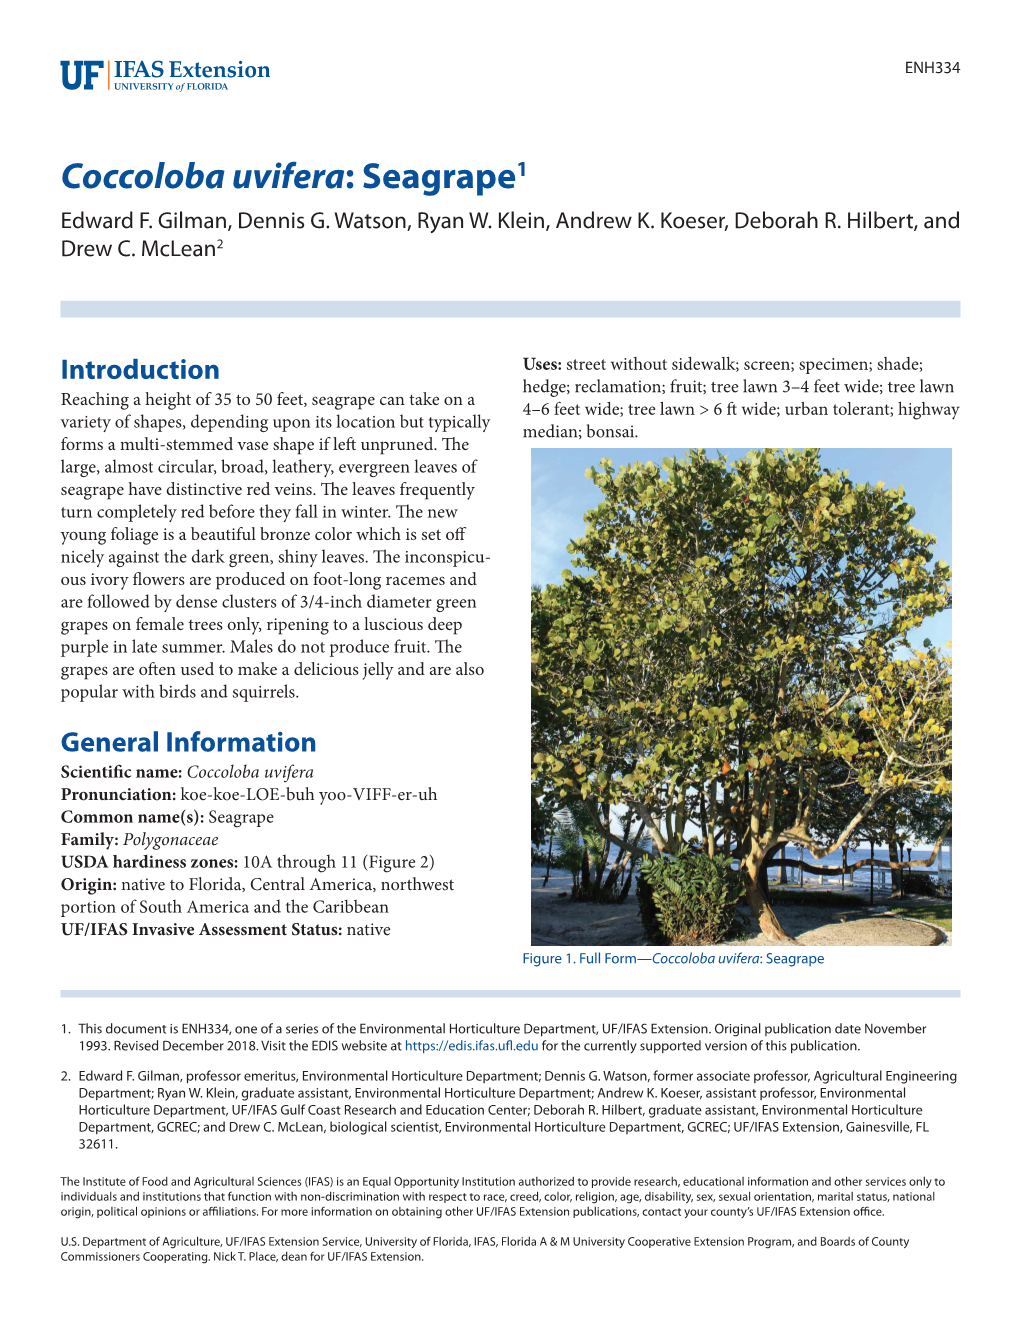 Coccoloba Uvifera: Seagrape1 Edward F